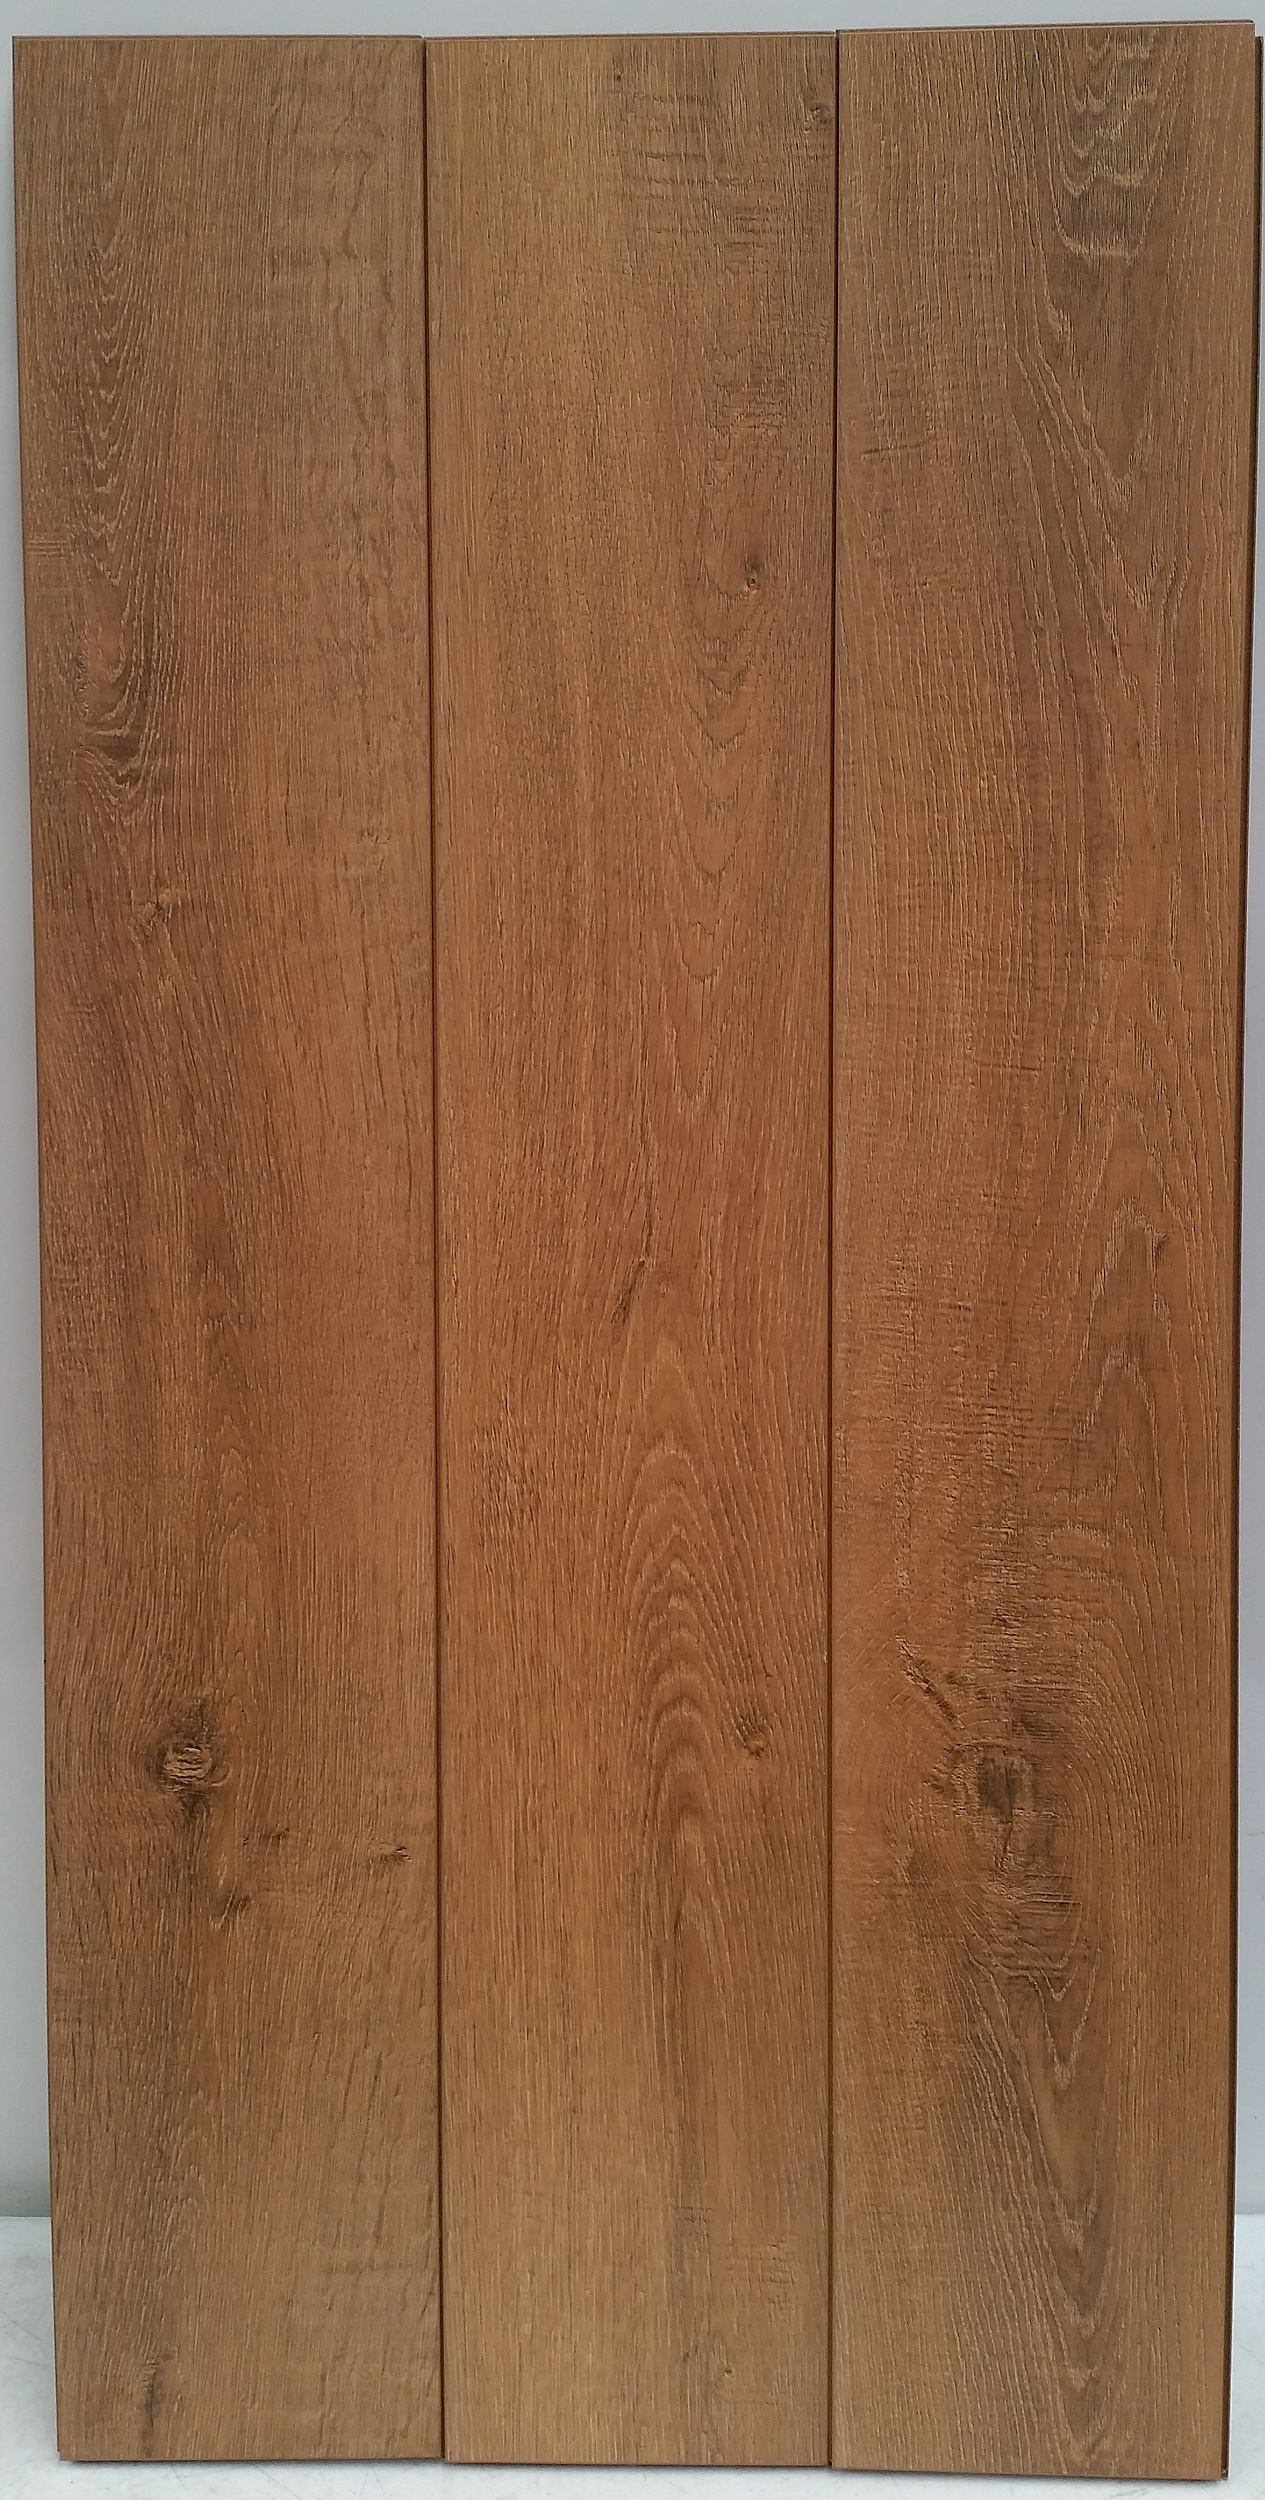 First Class Wood Flooring Rustic - Lot 1136159 ALLBIDS